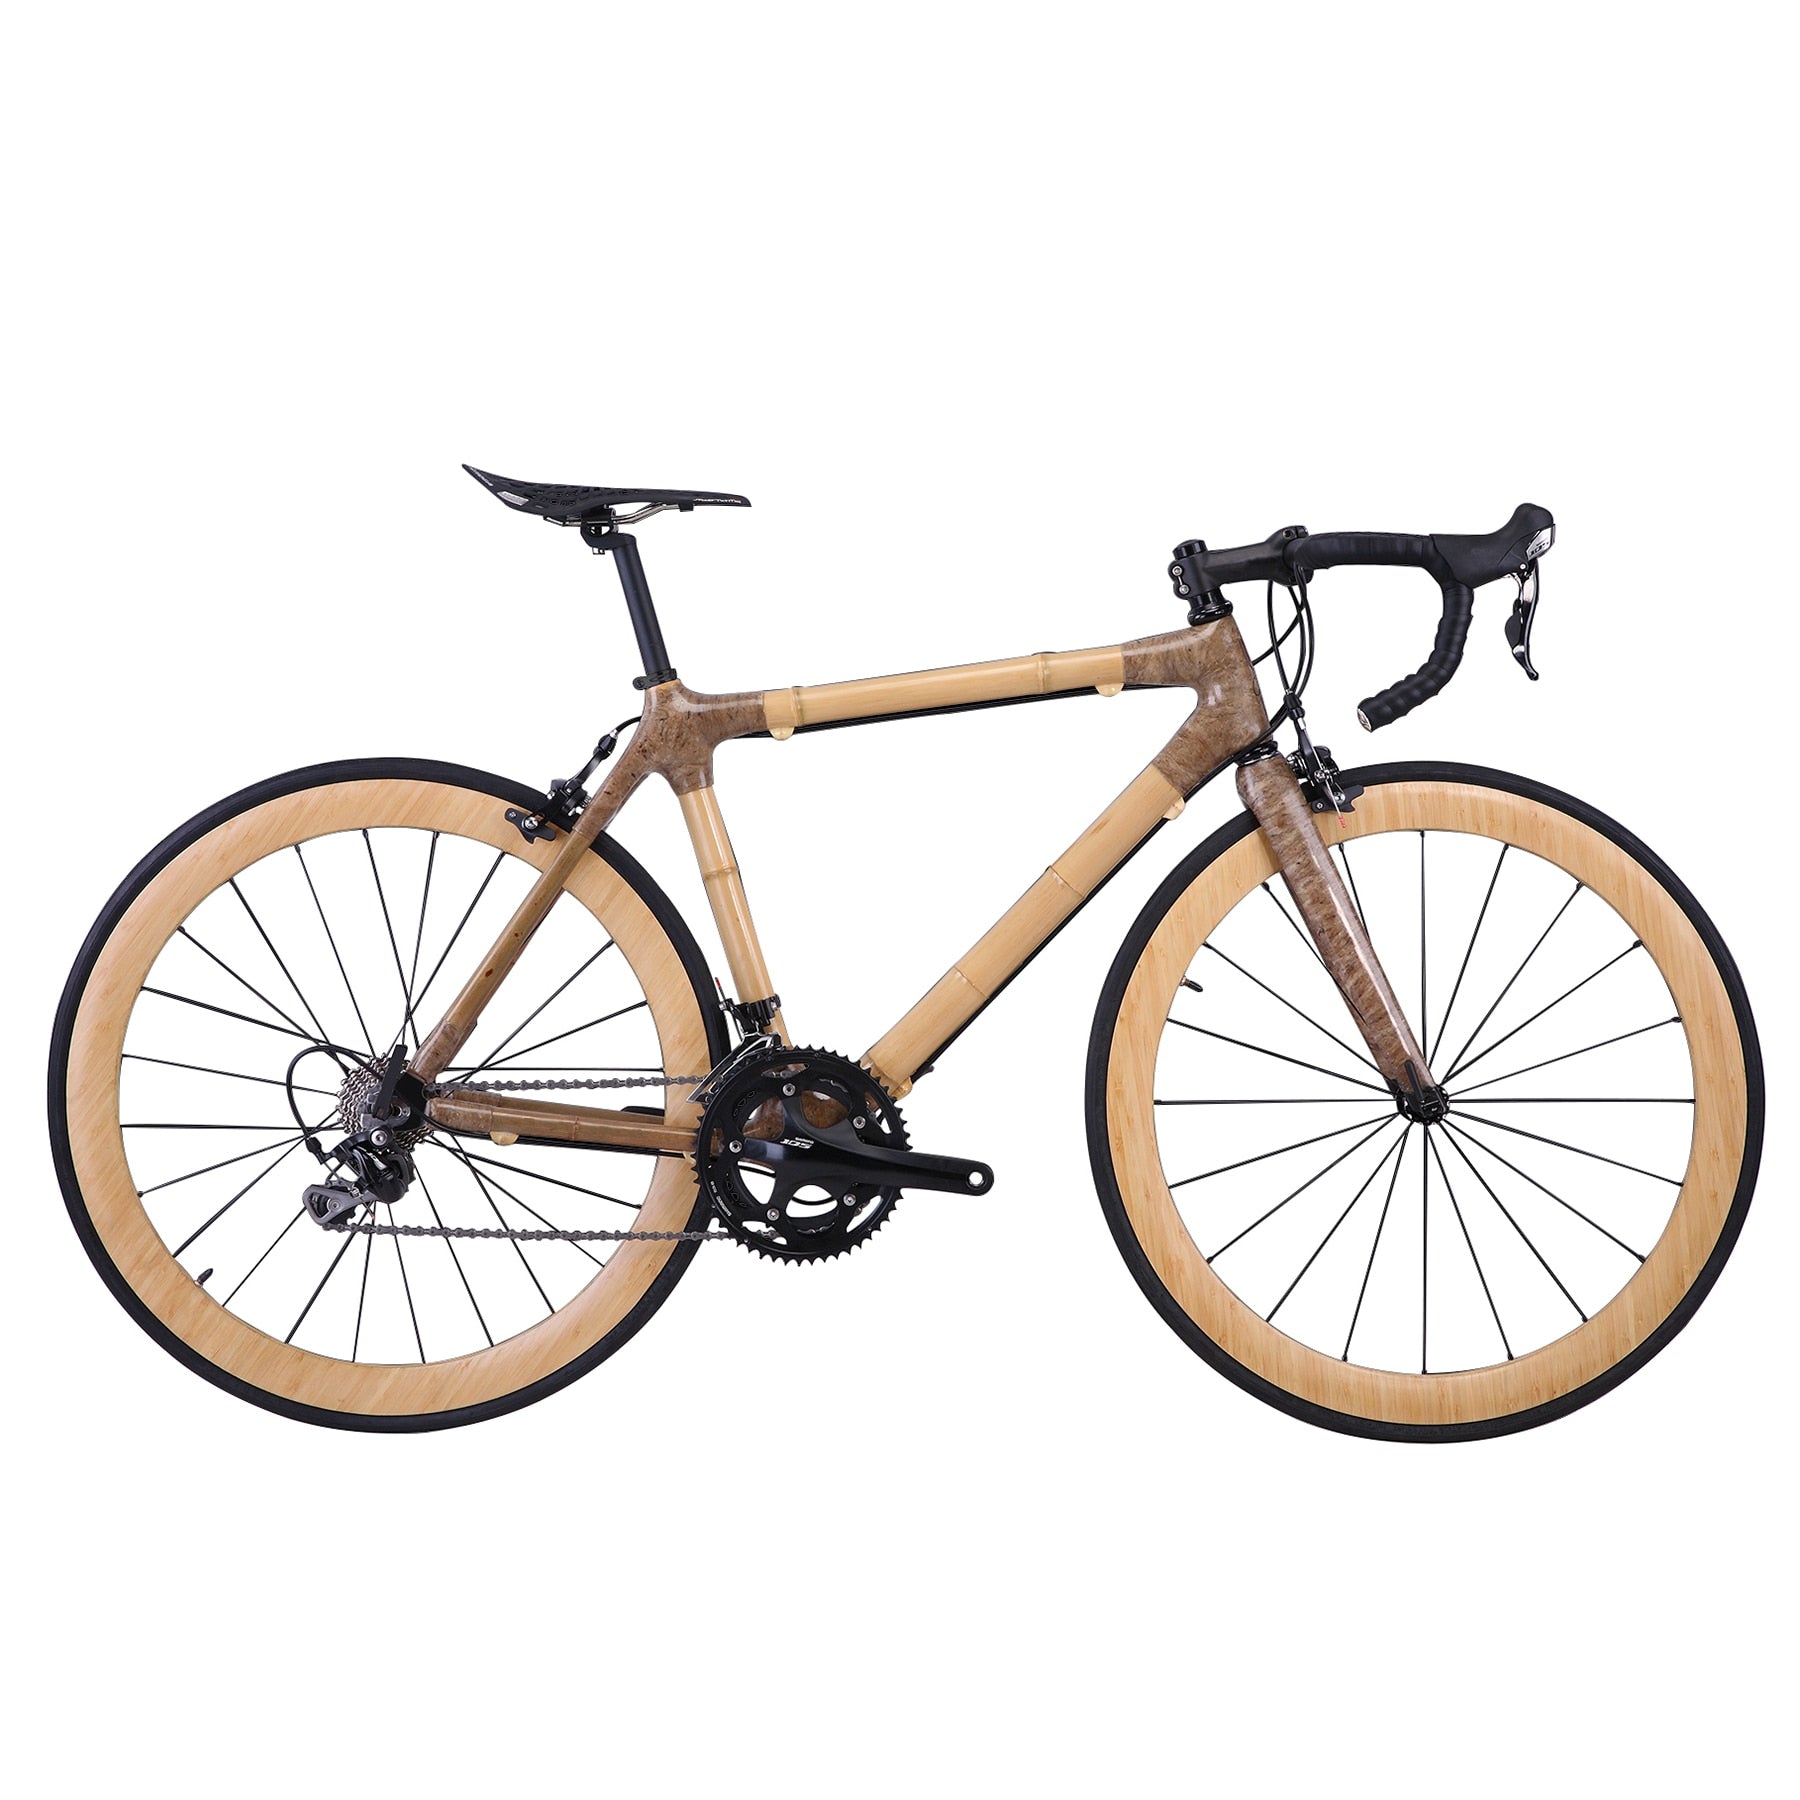 NatureFly Super Pro+ Carbon Bamboo Road Bike